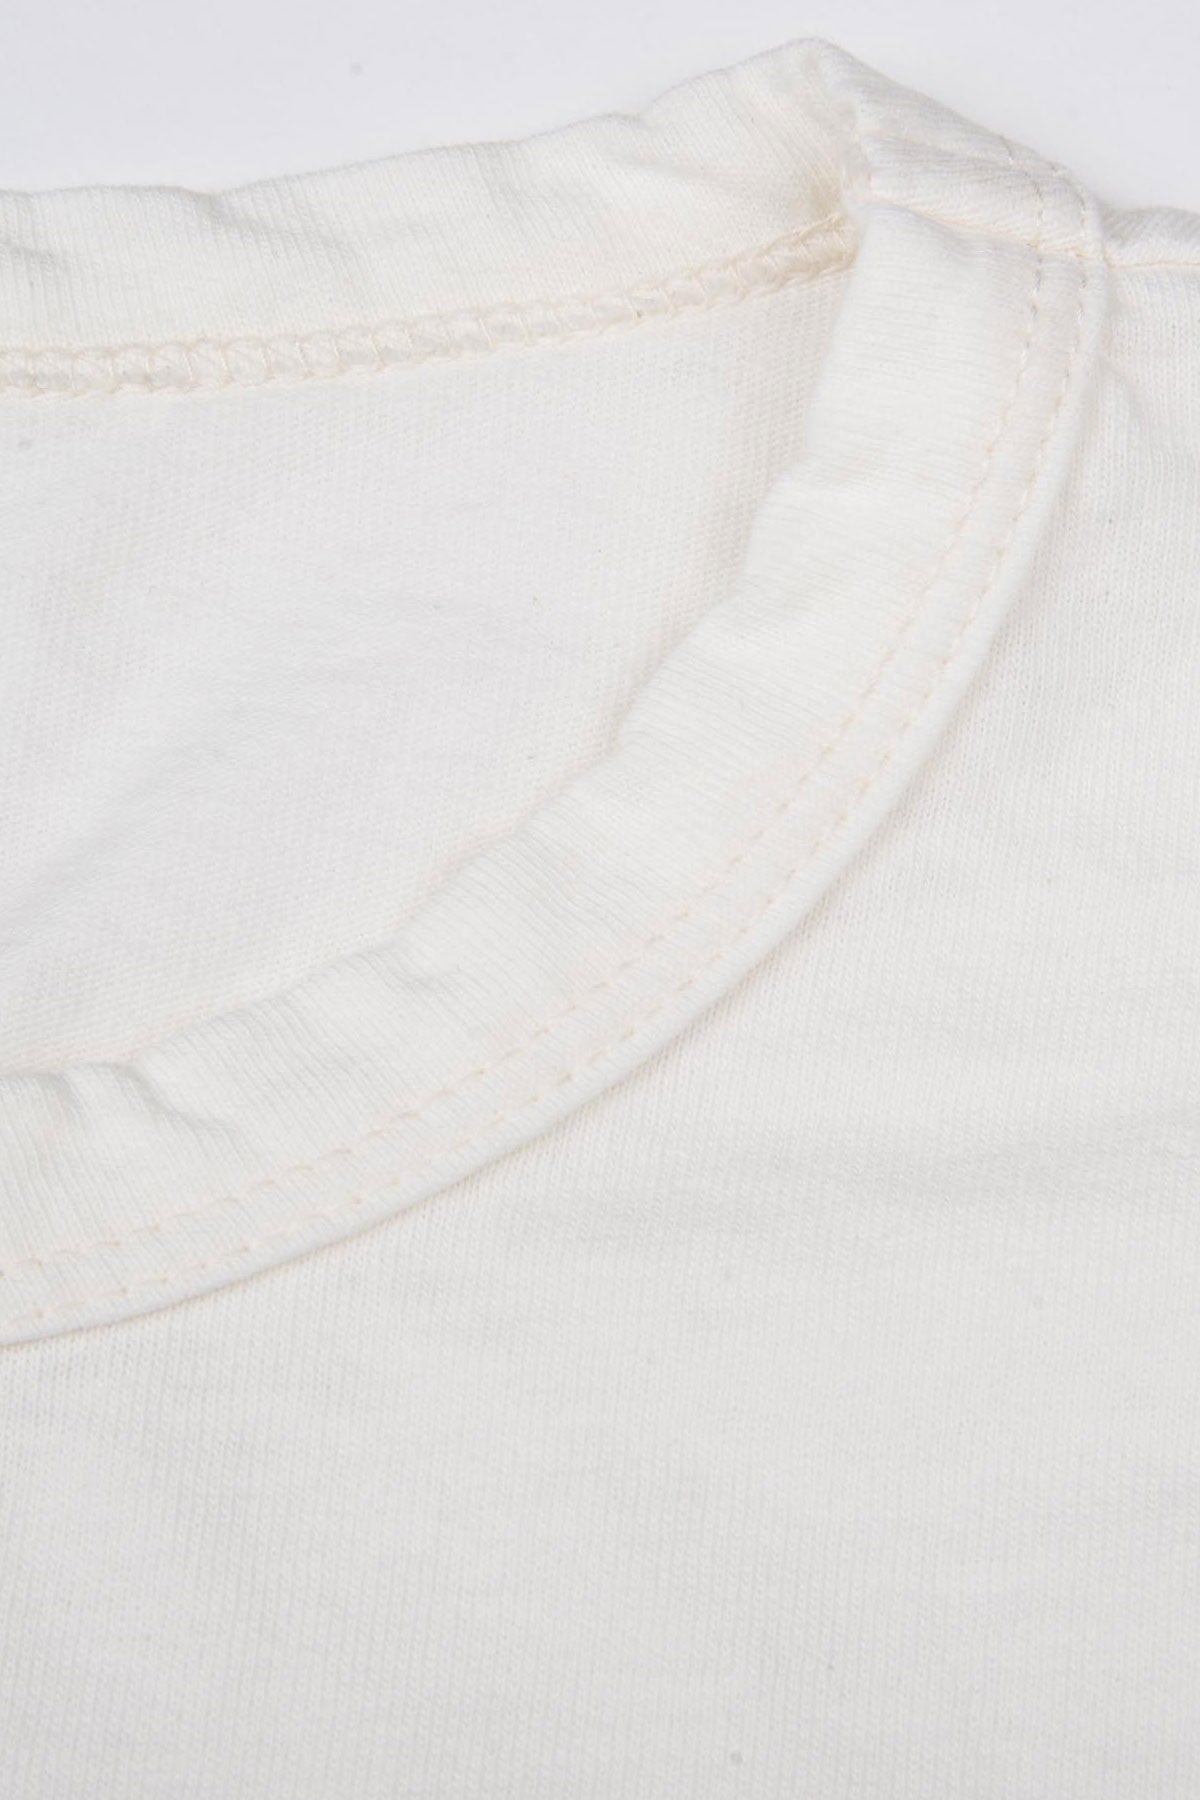 Freenote Cloth - 9 Ounce Pocket Tee - White